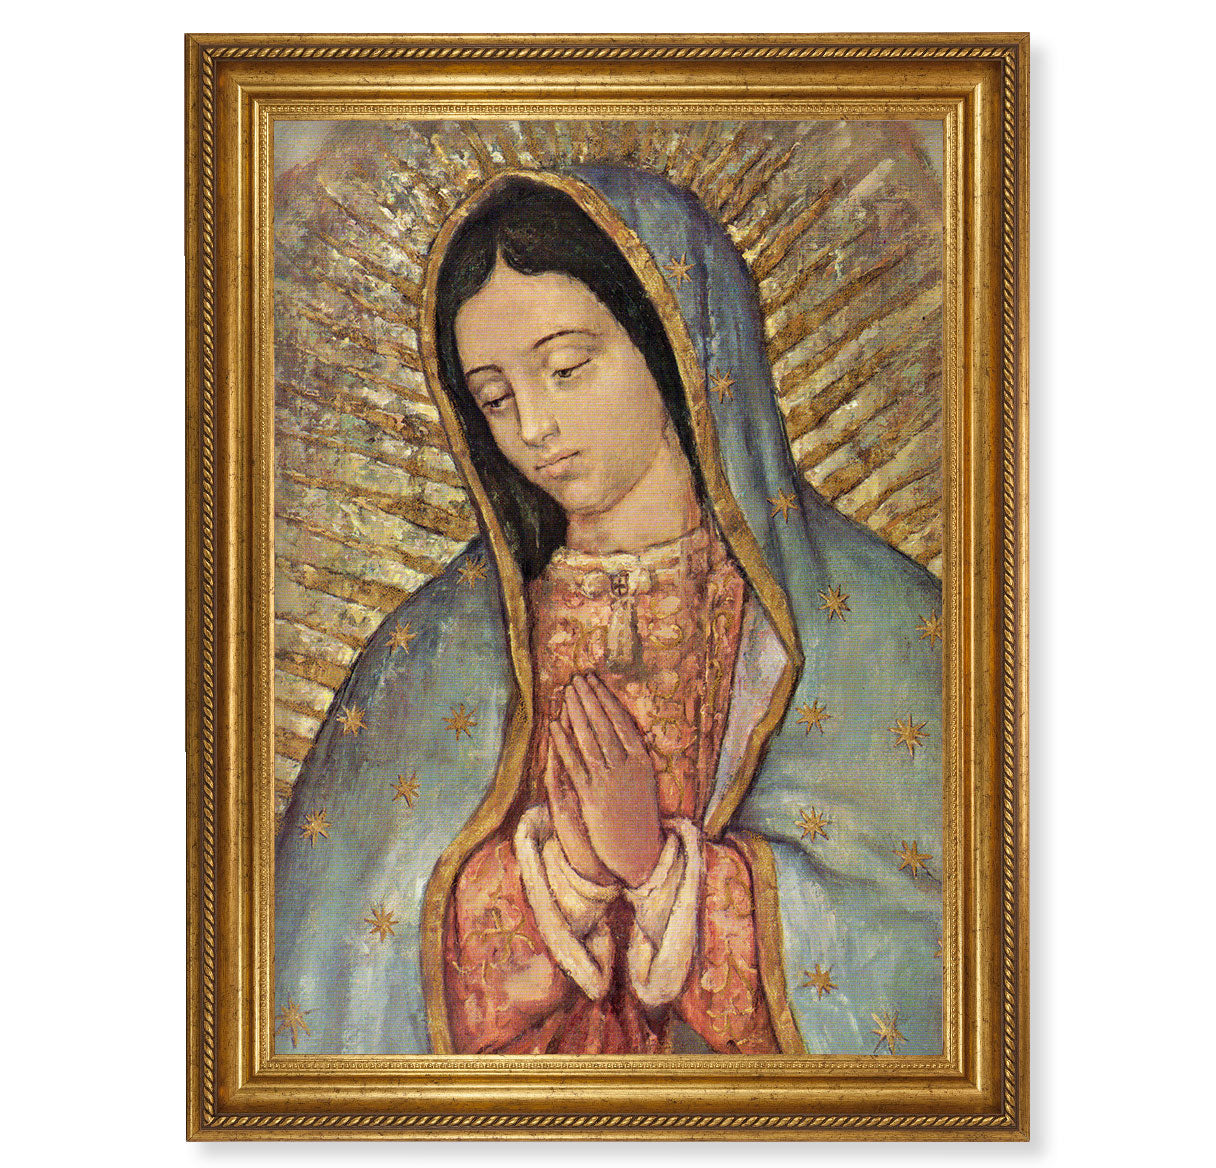 Our Lady of Guadalupe Antique Gold-Leaf Framed Art